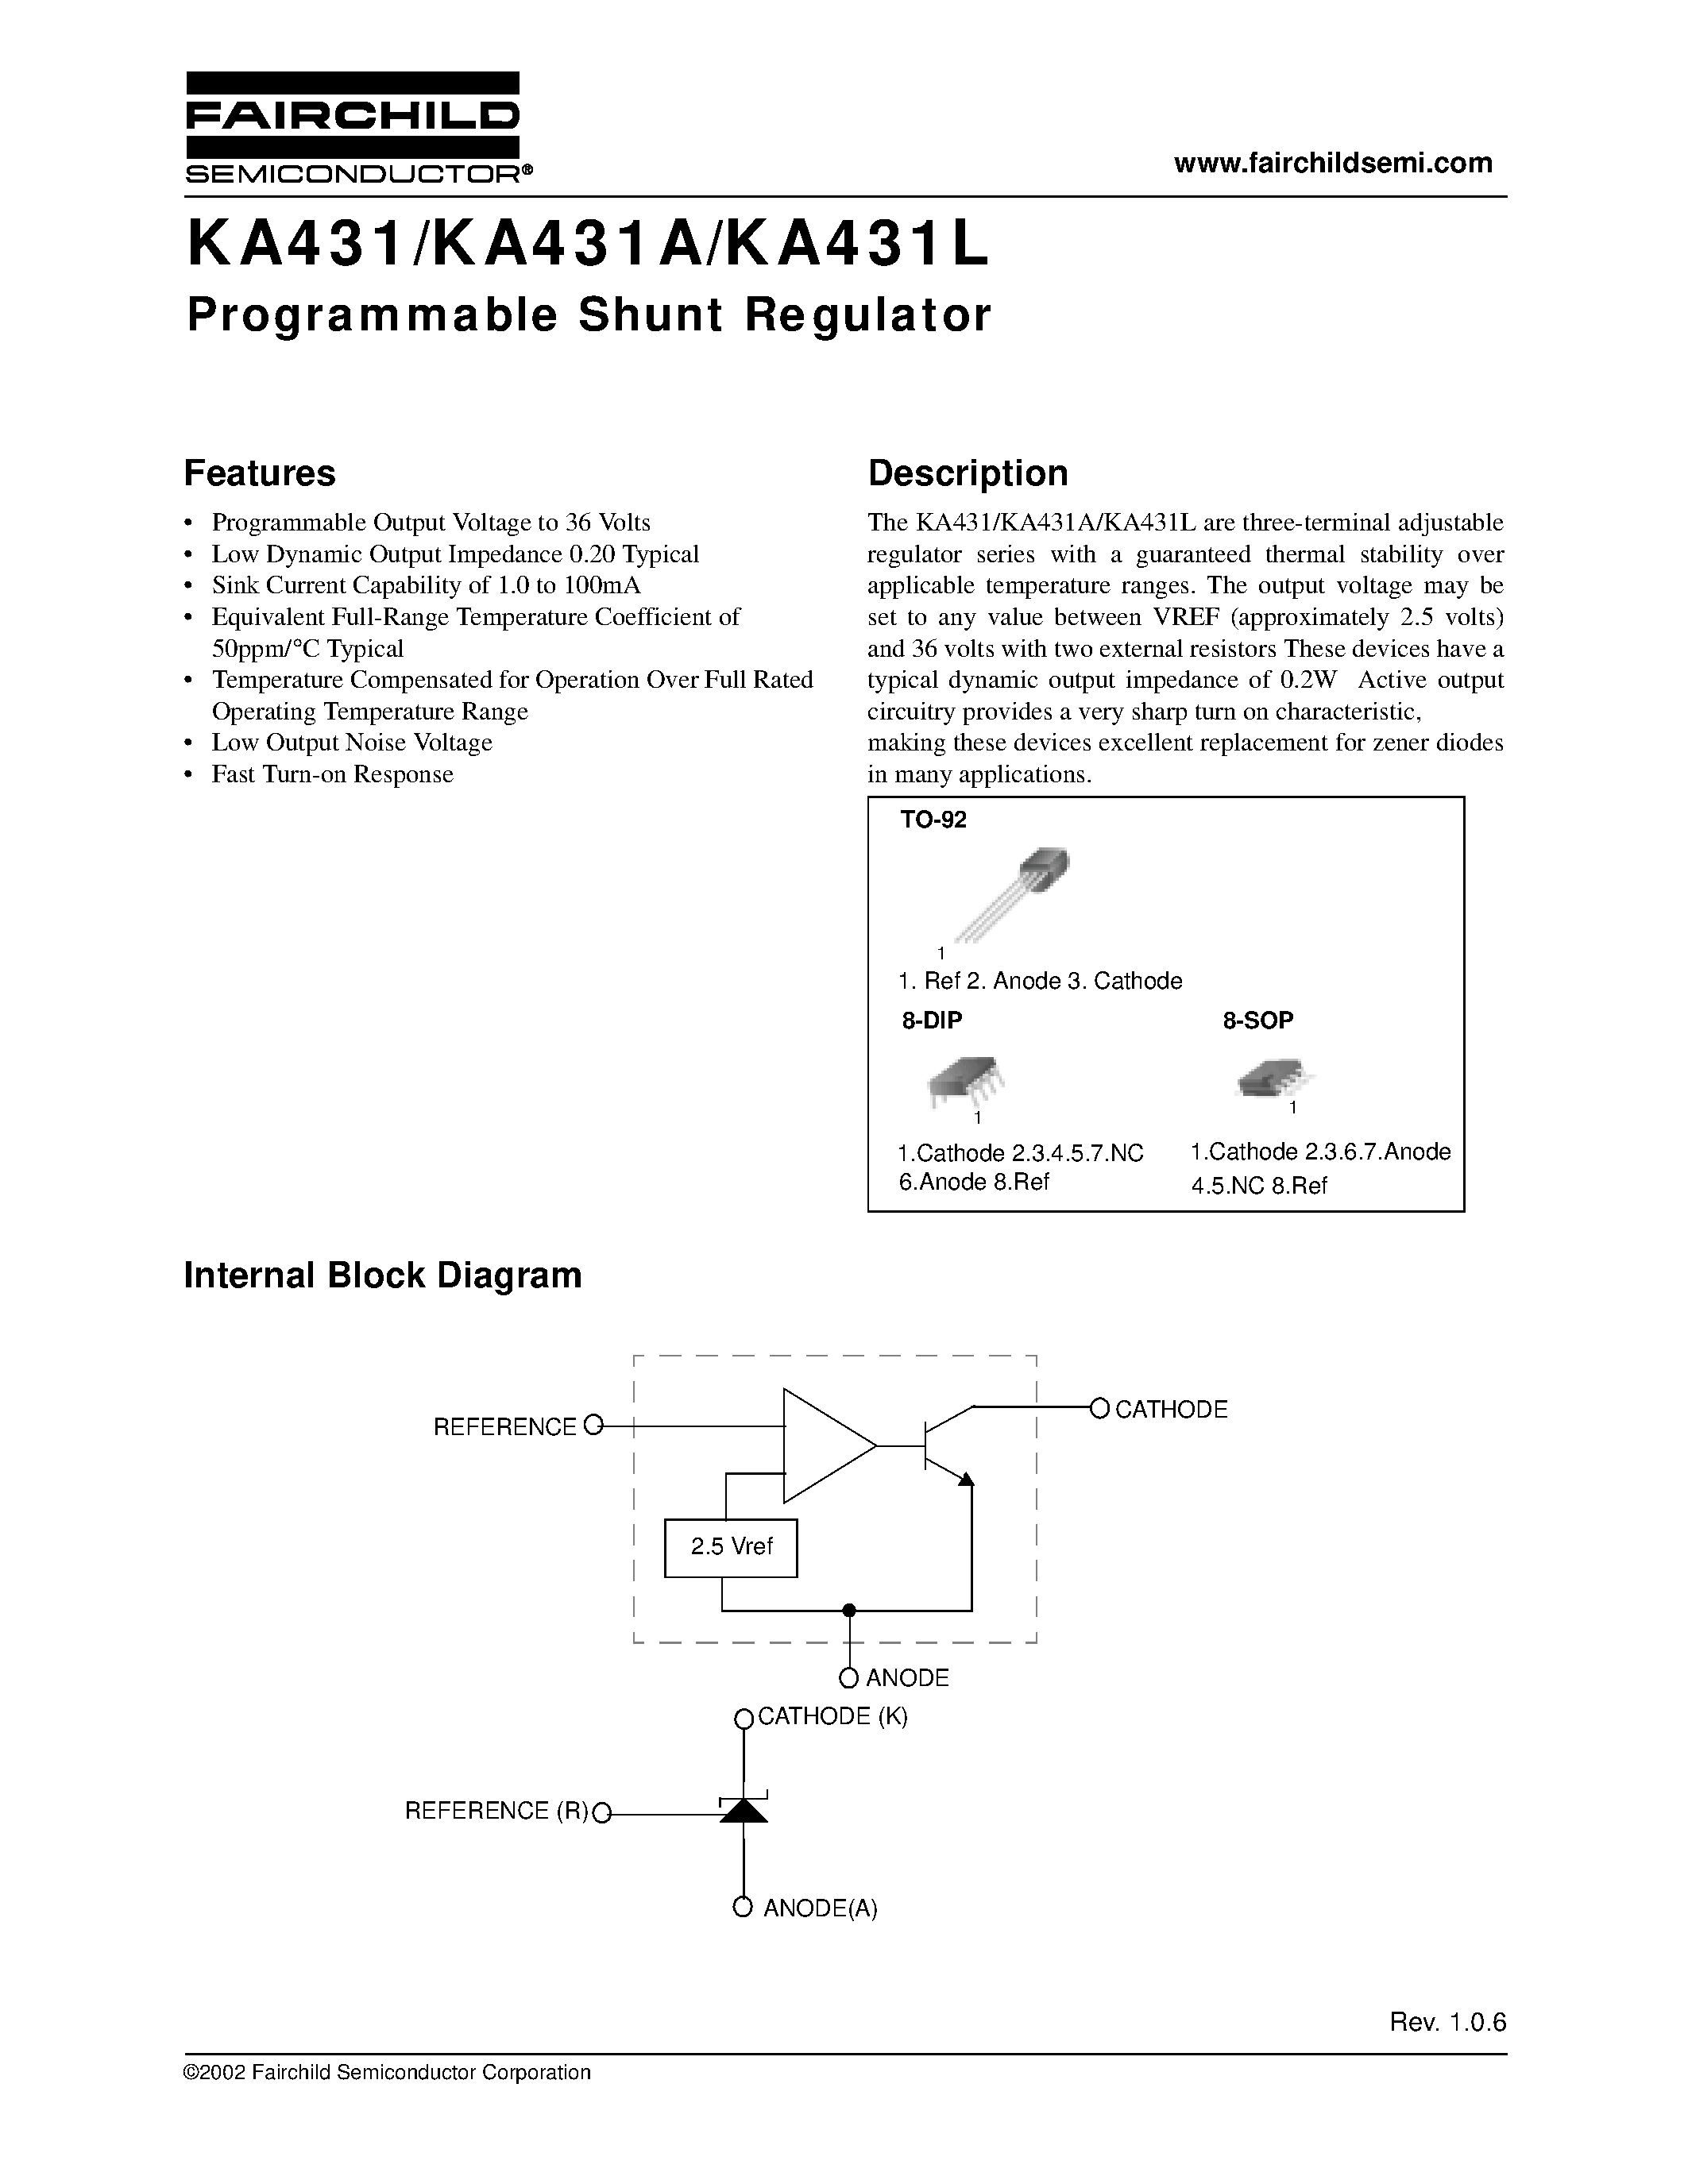 Datasheet KA431L - Programmable Shunt Regulator page 1